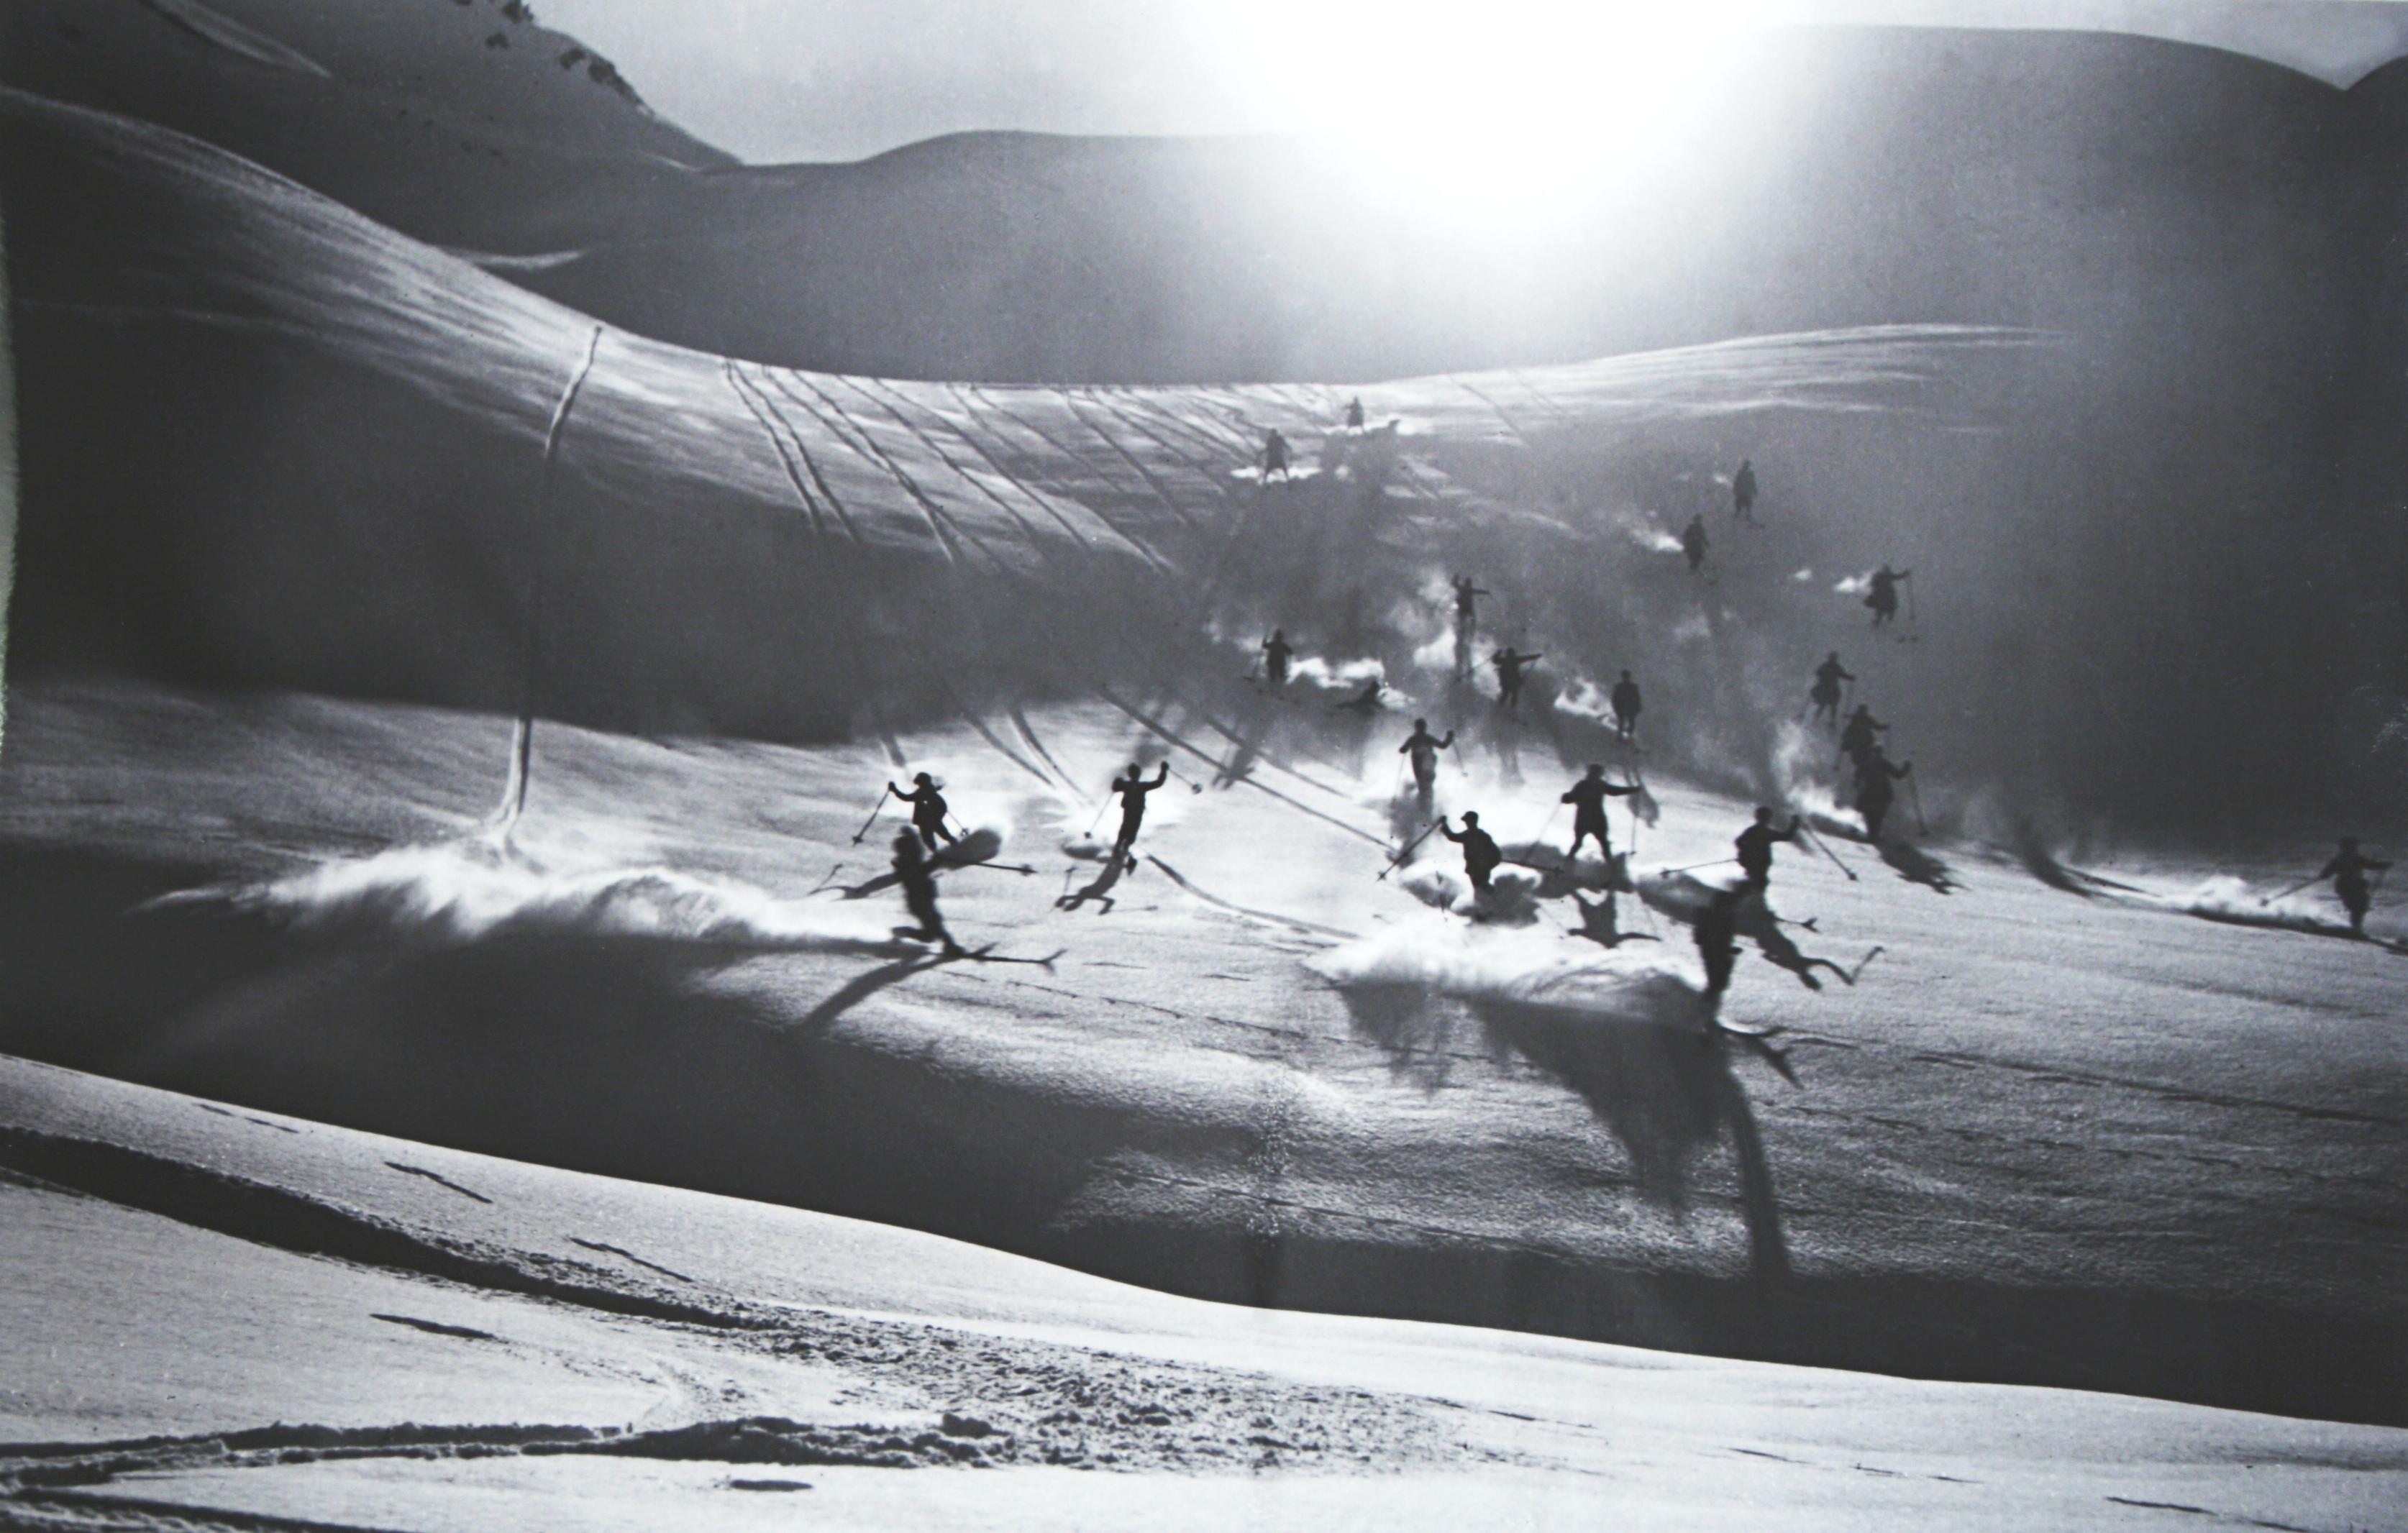 Vintage, photographie de ski alpin.
happy Skiers